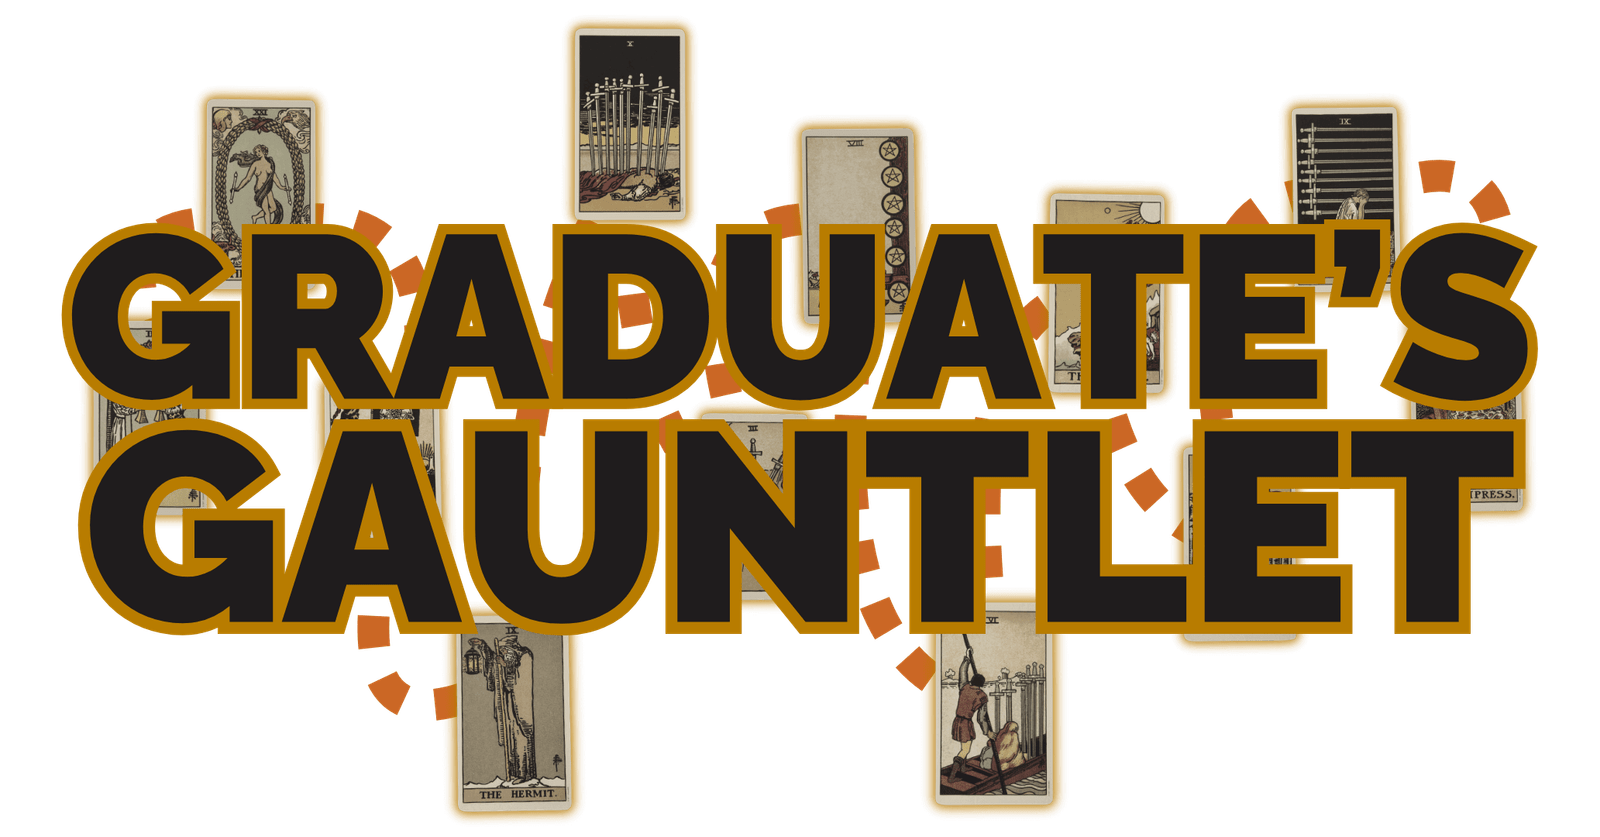 Graduates gauntlet tarot spread | tarot with gord